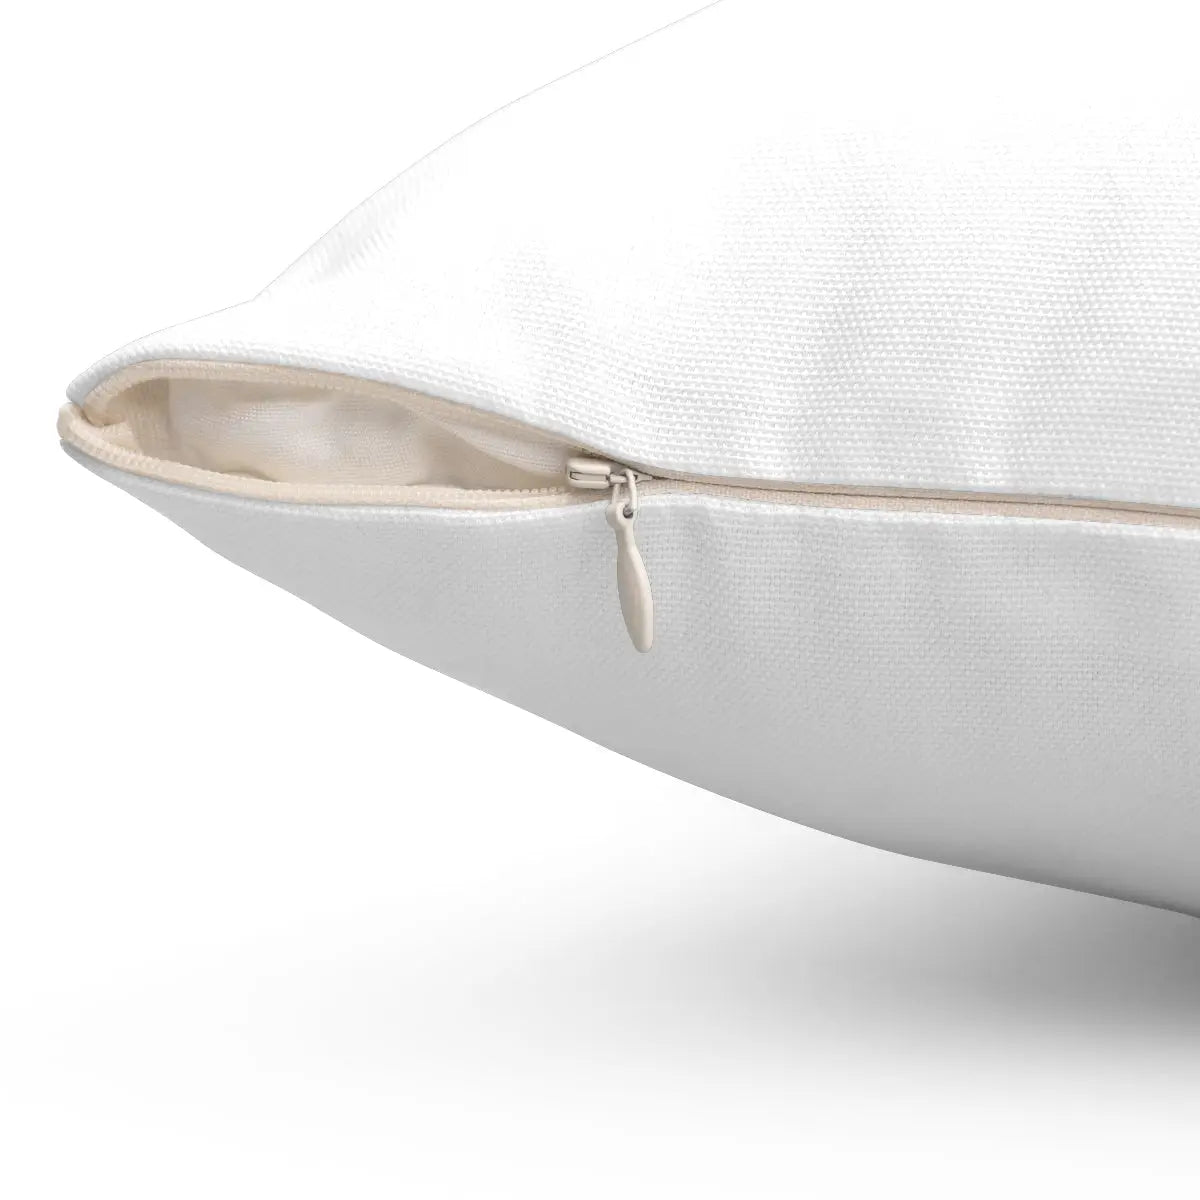 Stay Spun Polyester Square Pillow - papercraneco